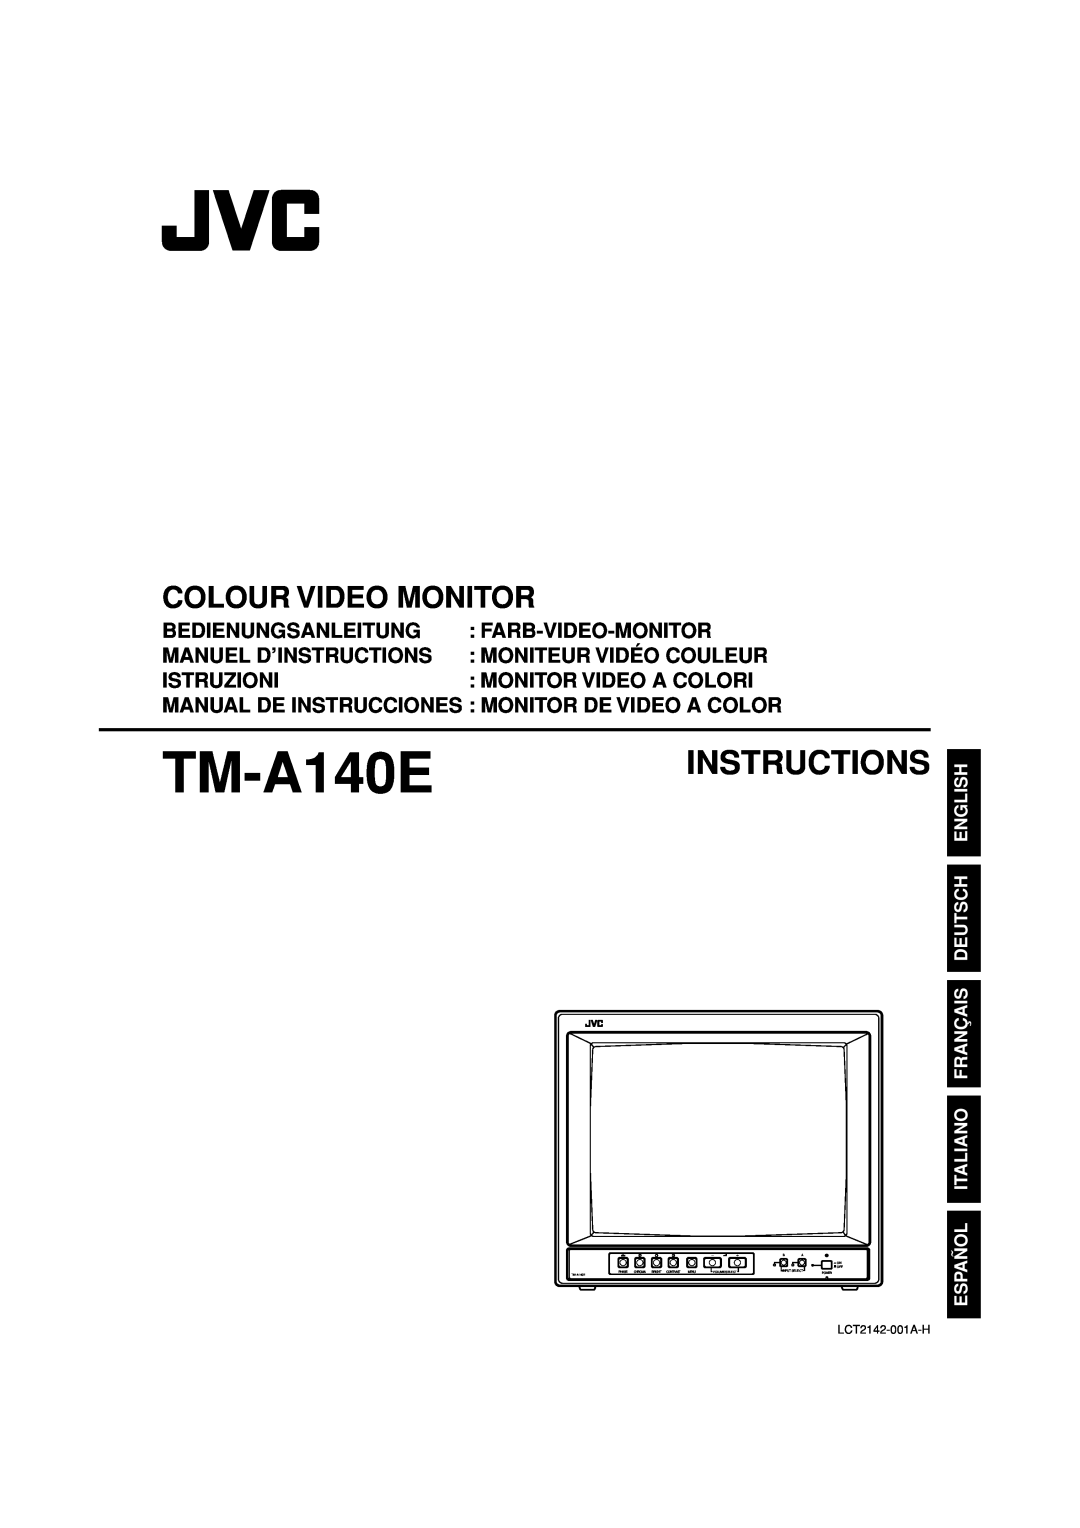 JVC LCT2142-001A-H manual Colour Video Monitor, Bedienungsanleitung, Farb-Video-Monitor, Manuel D’Instructions, Istruzioni 